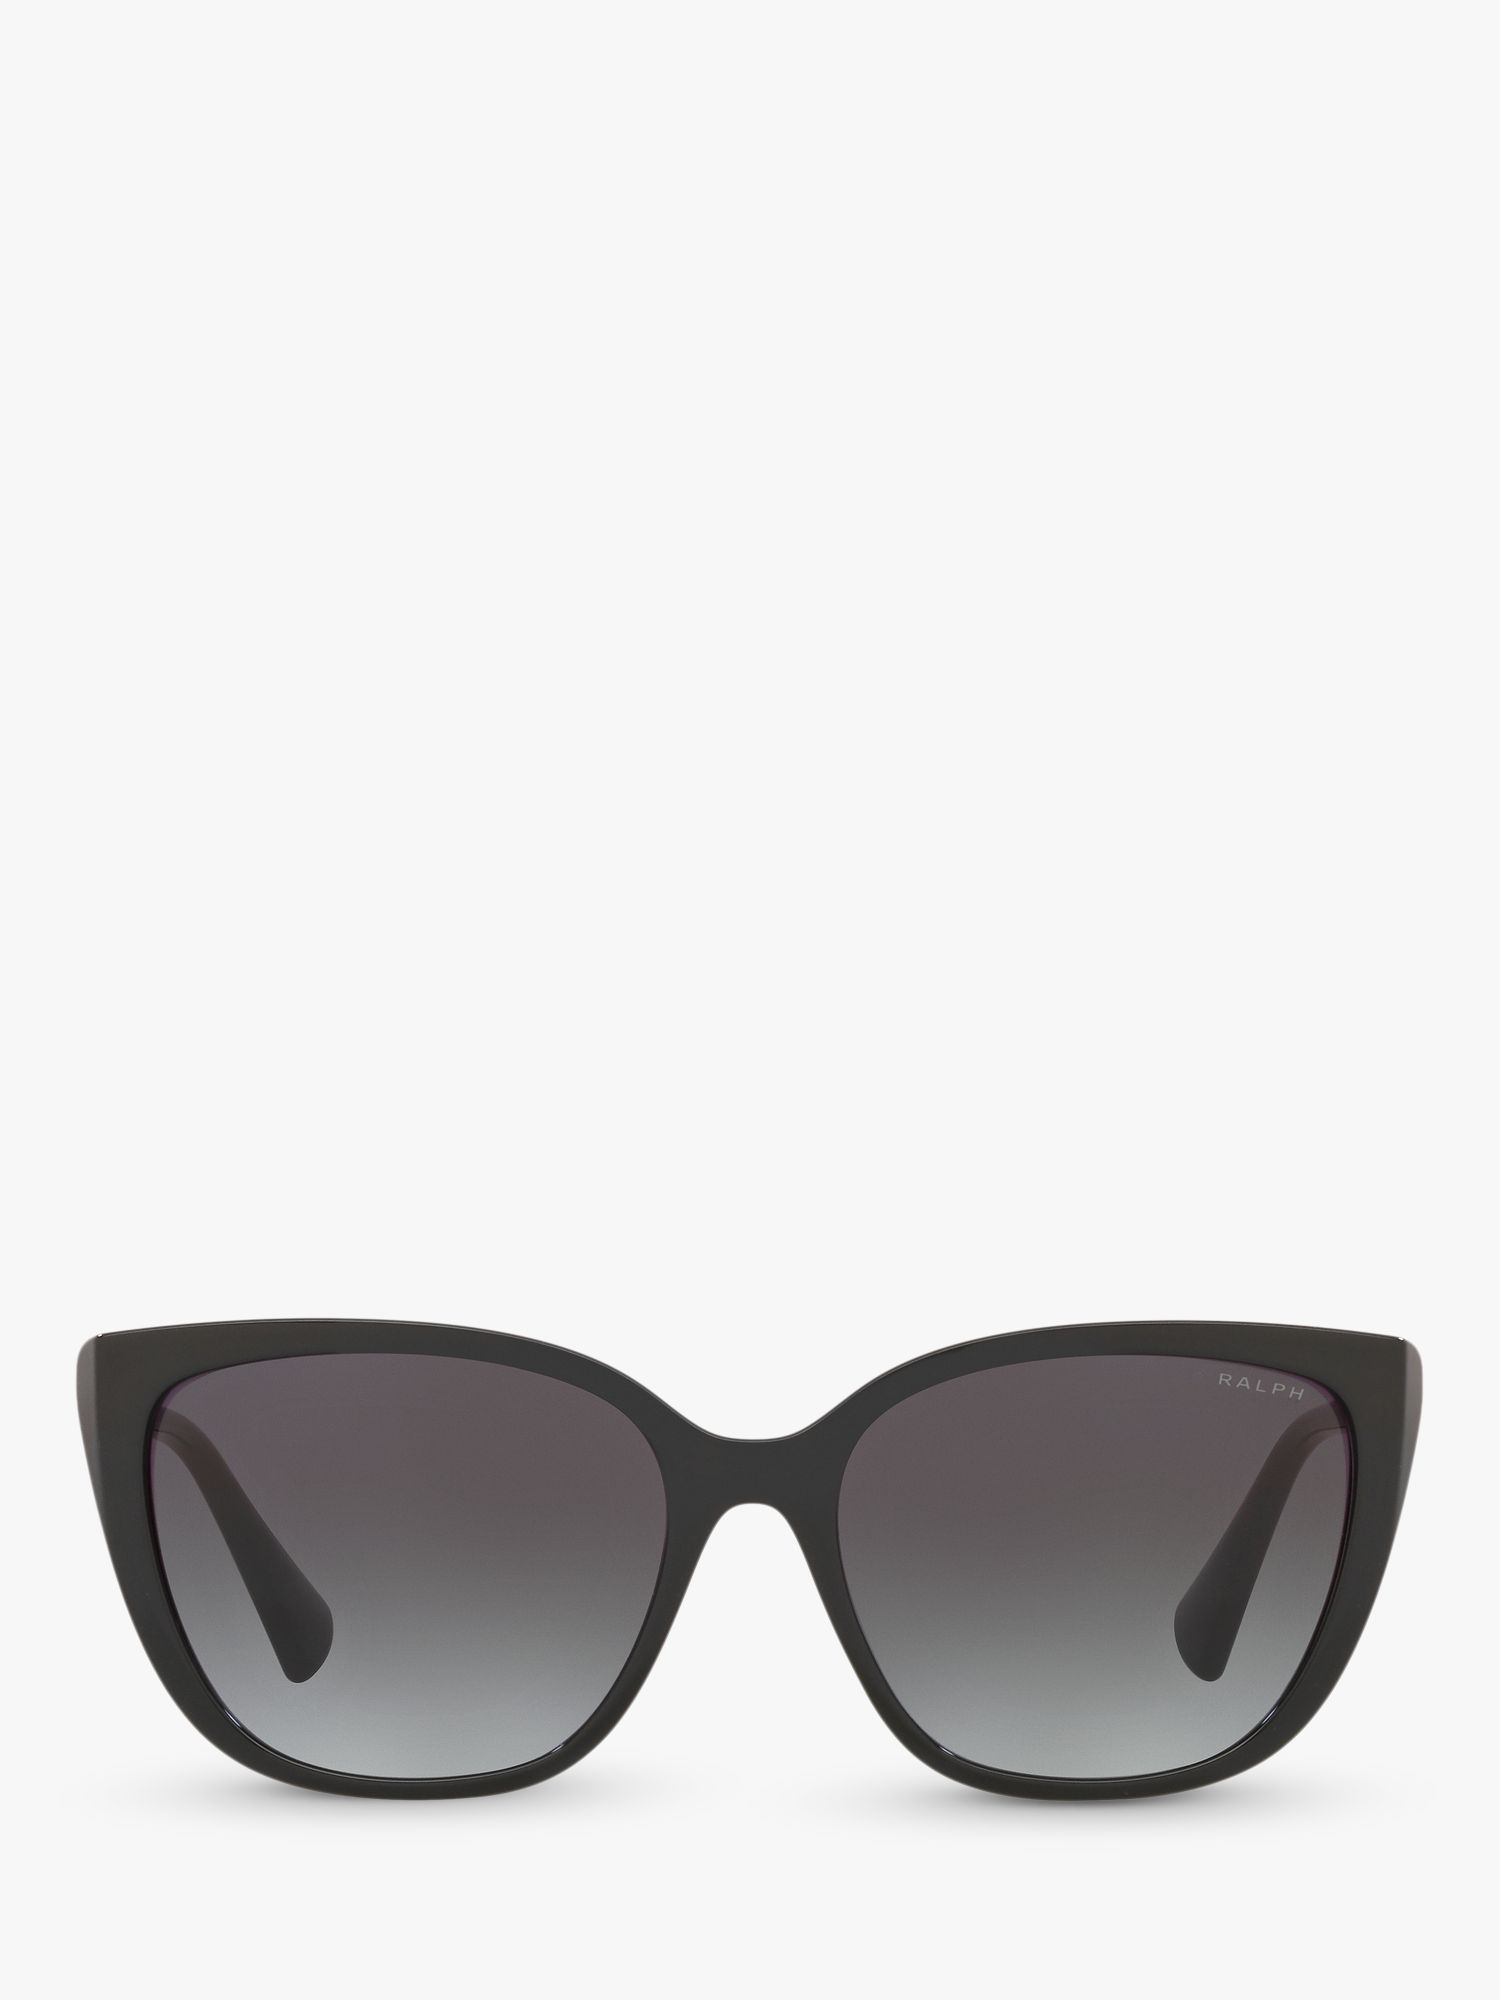 Ralph RA5274 Women's Butterfly Shape Sunglasses, Black Gloss/Grey Gradient